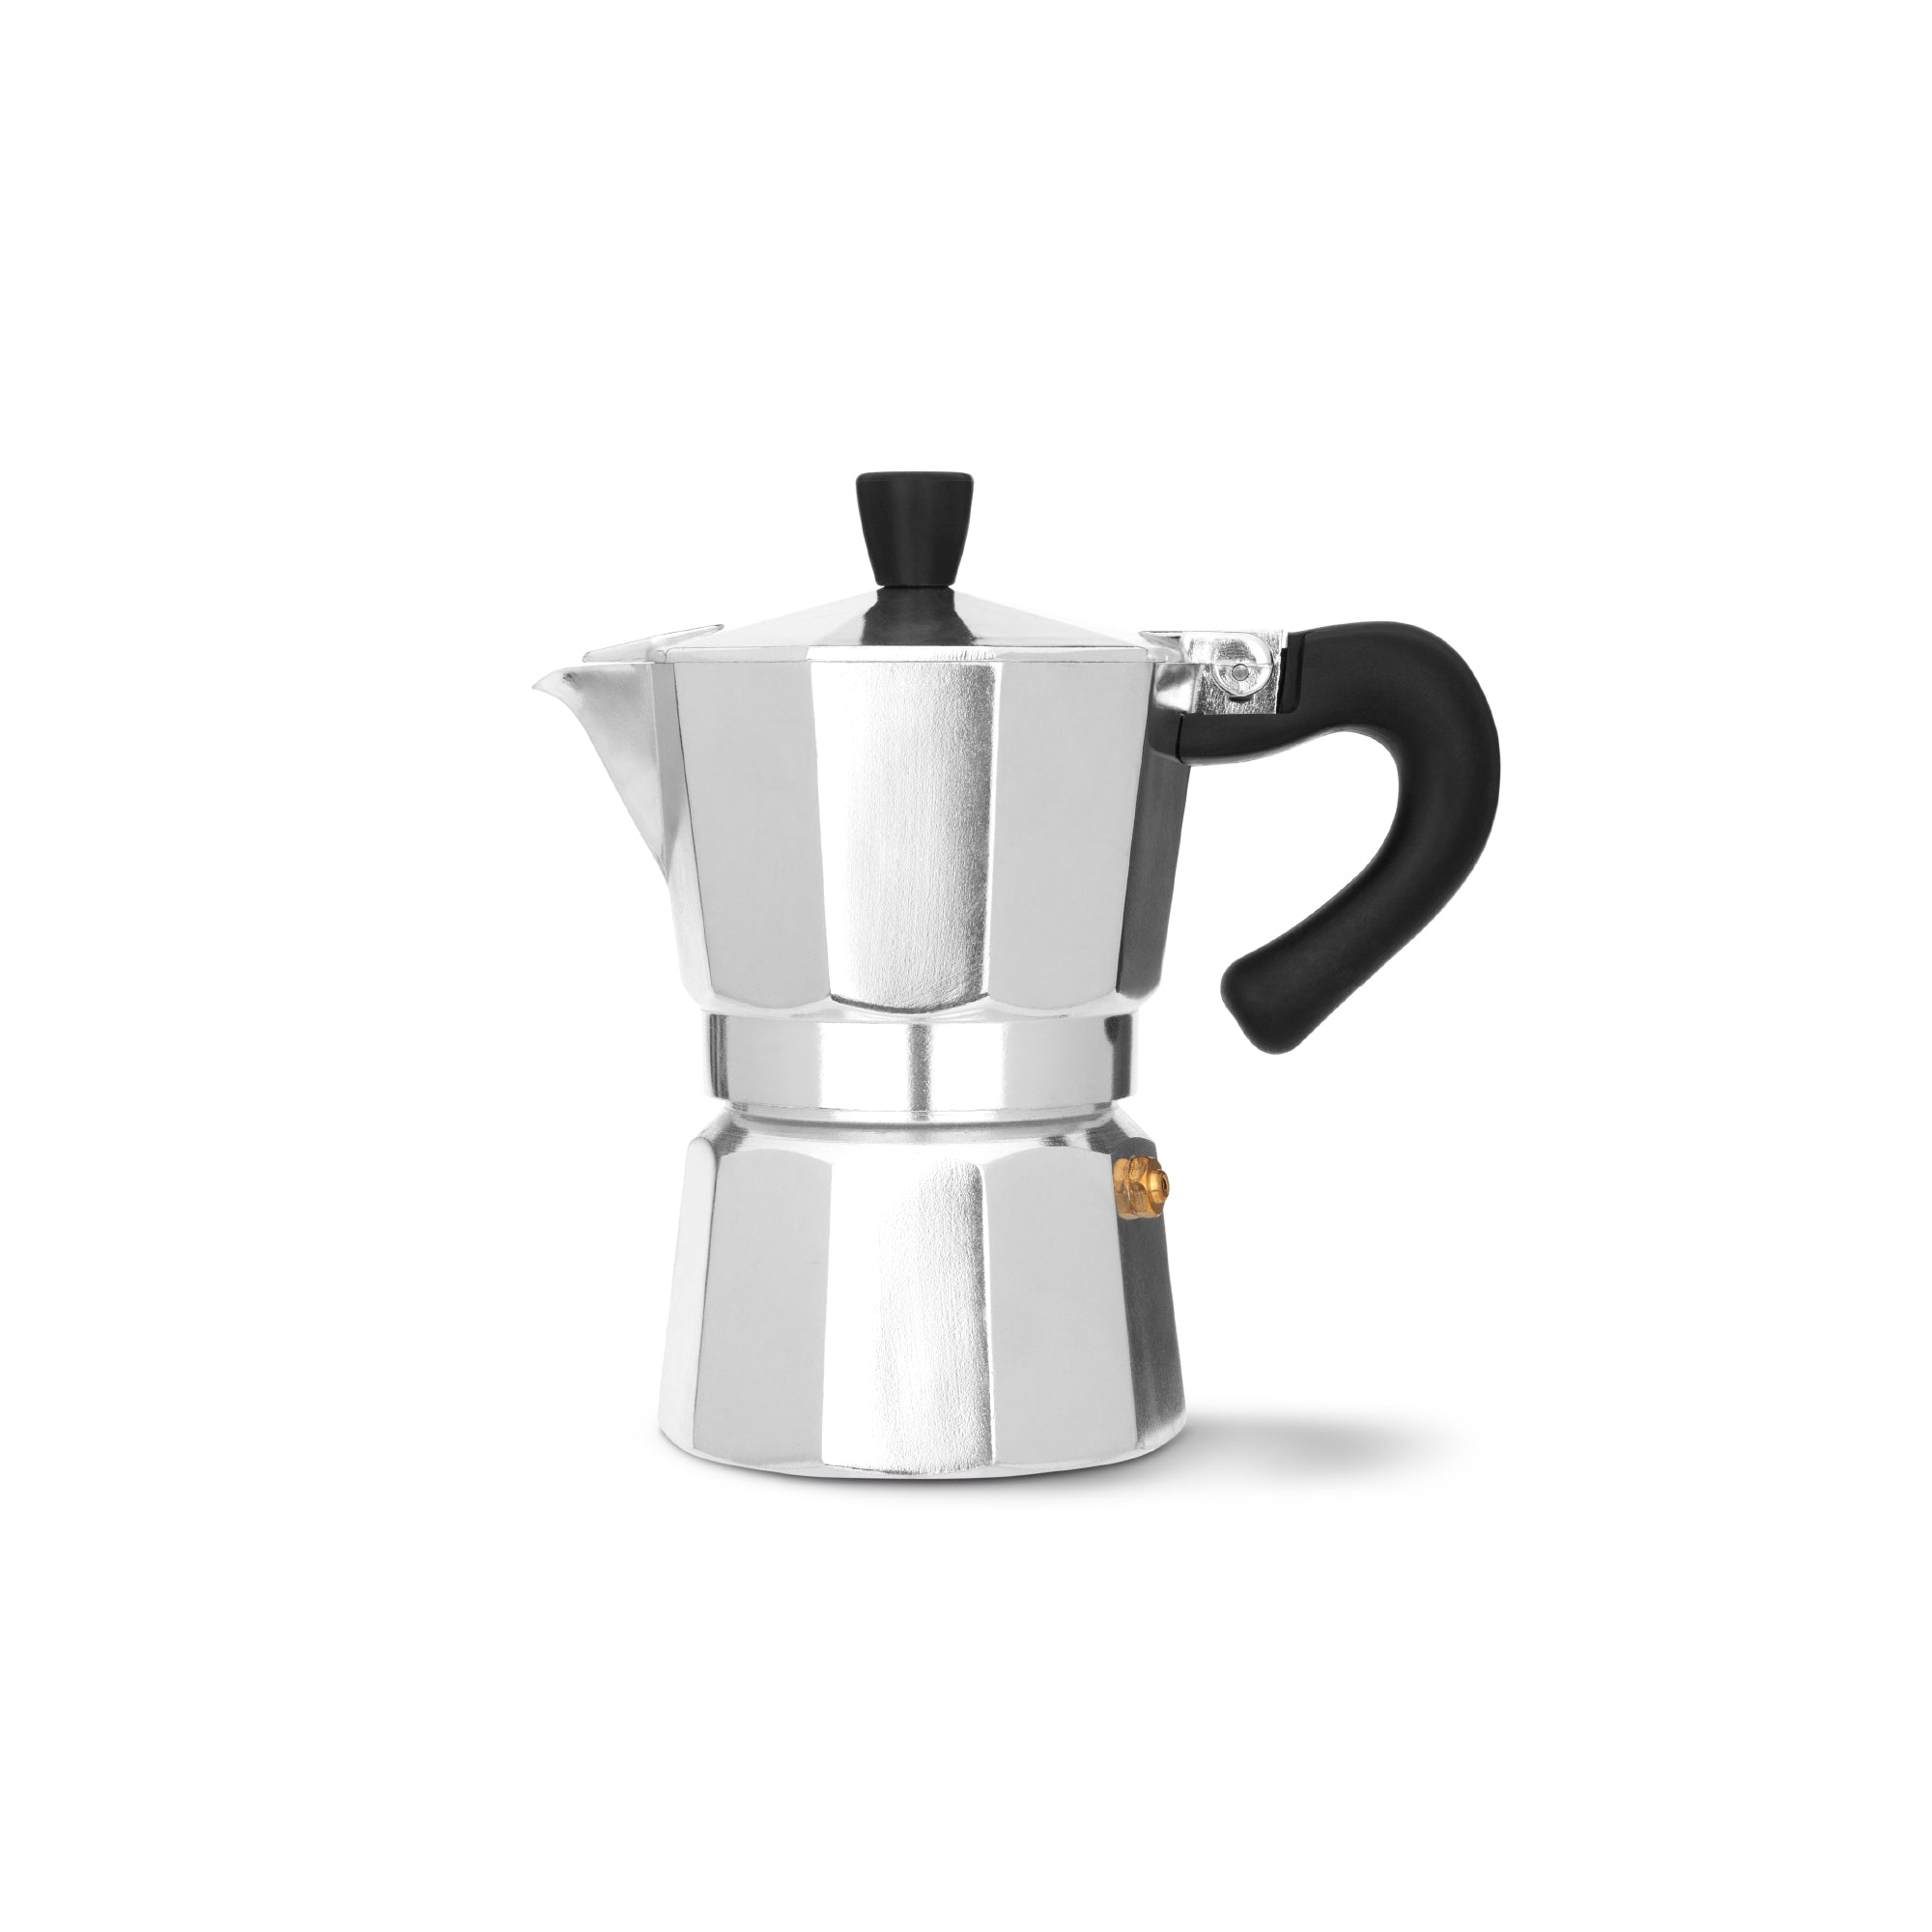 Stovetop Espresso Machine, Stainless Steel Coffee Maker, Moka